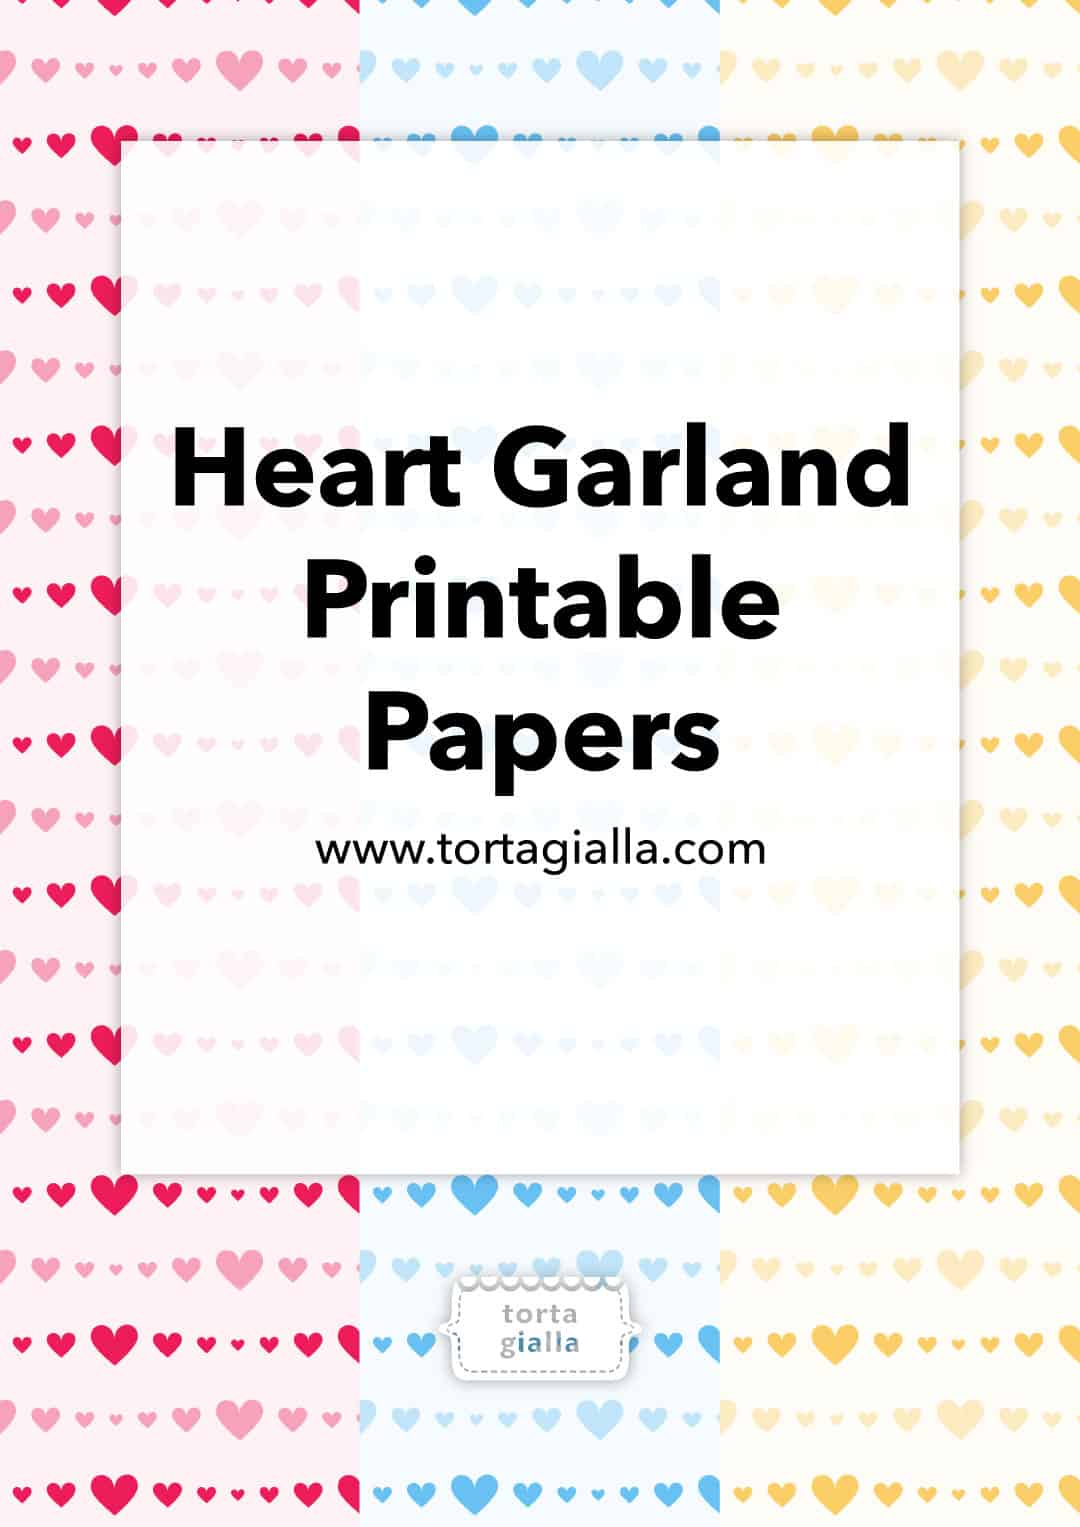 Heart Garland Printables